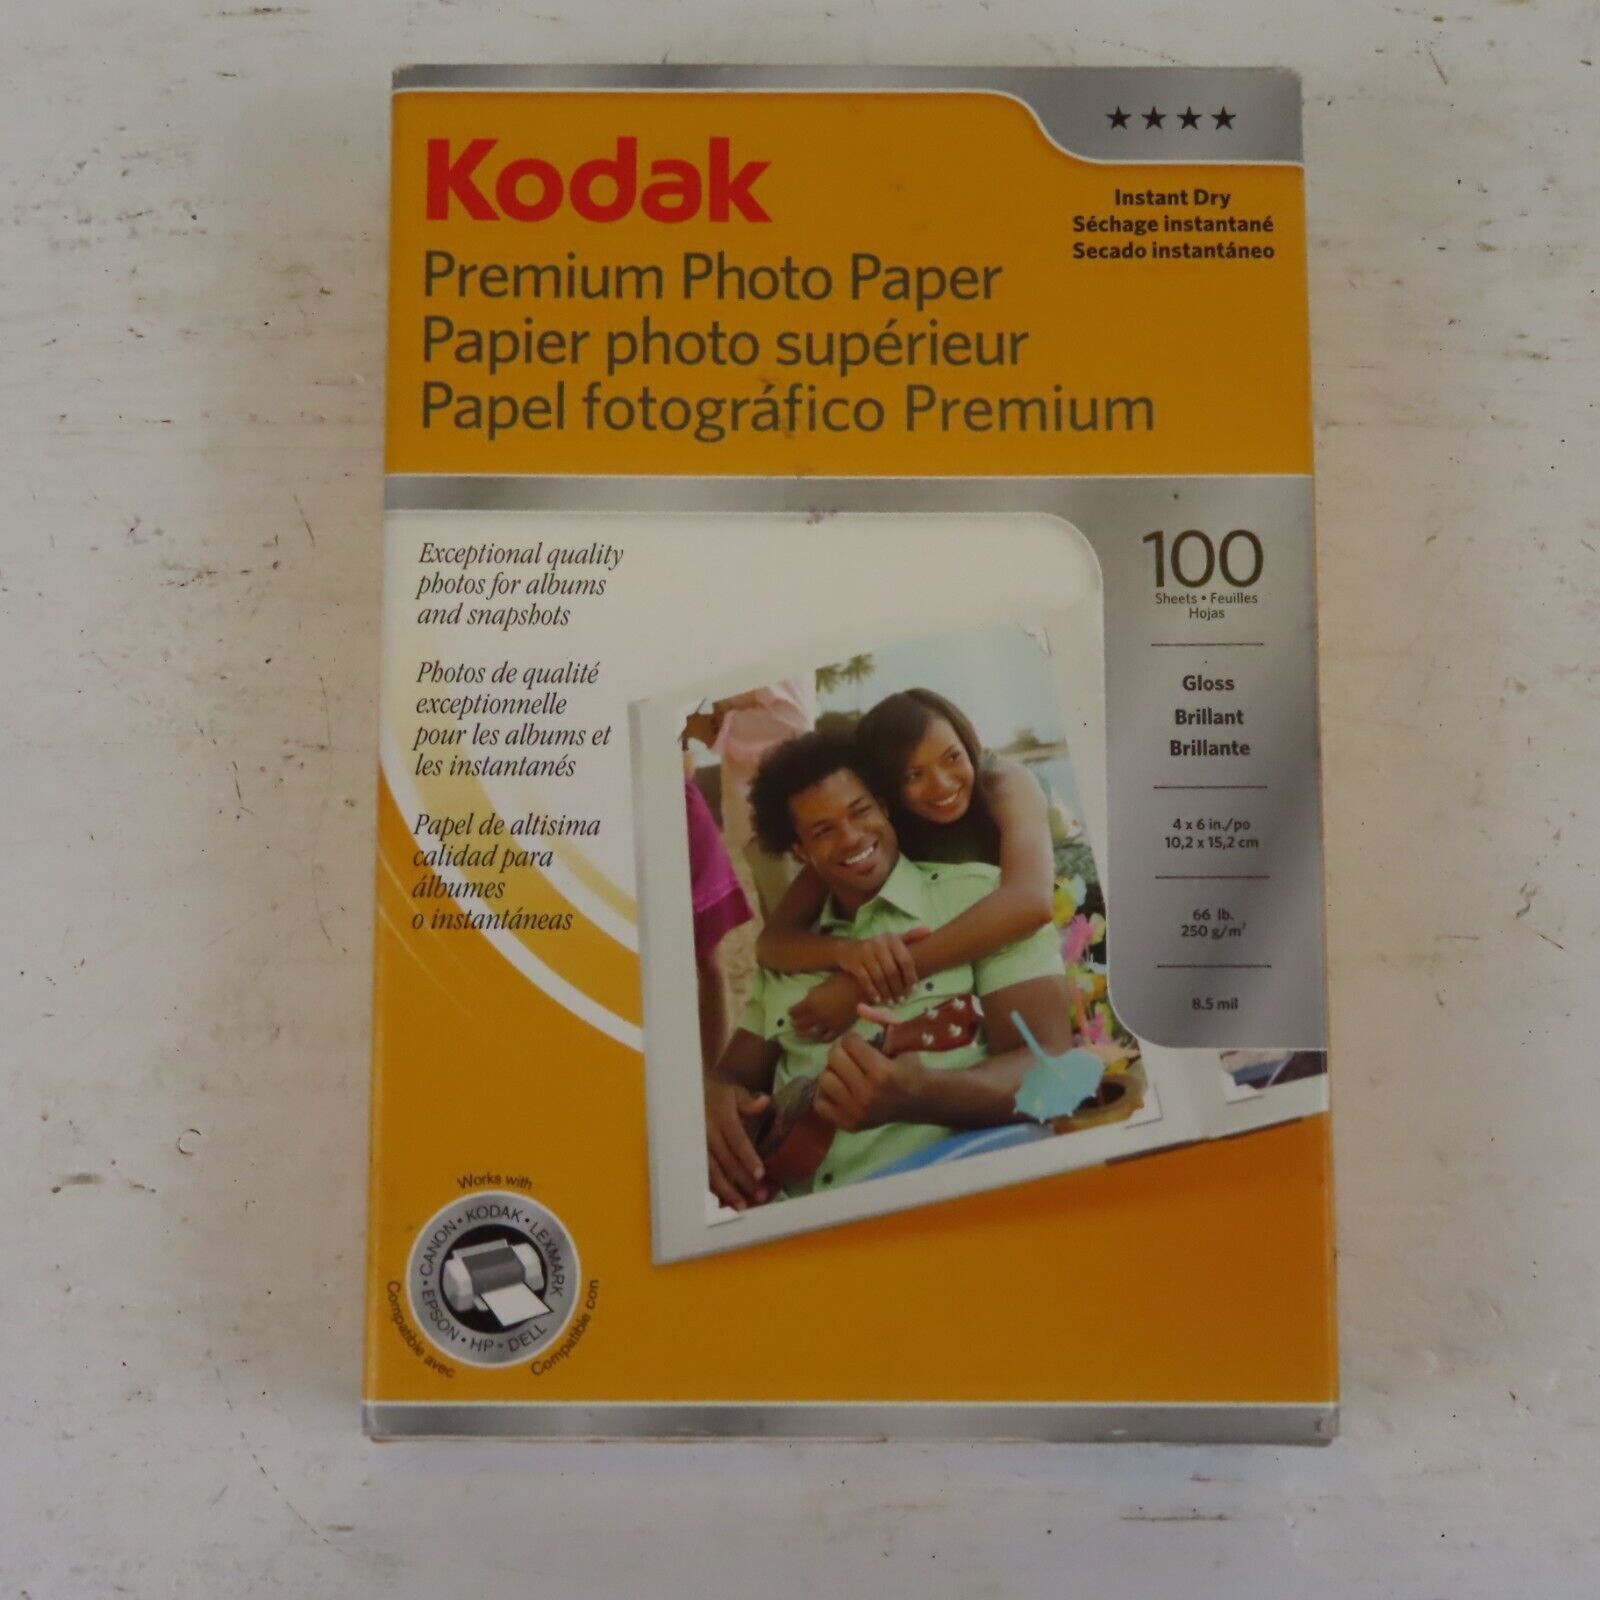 Kodak Ultra Premium Photo Paper 100 Sheets 4x6 Instant Dry Semi-Gloss